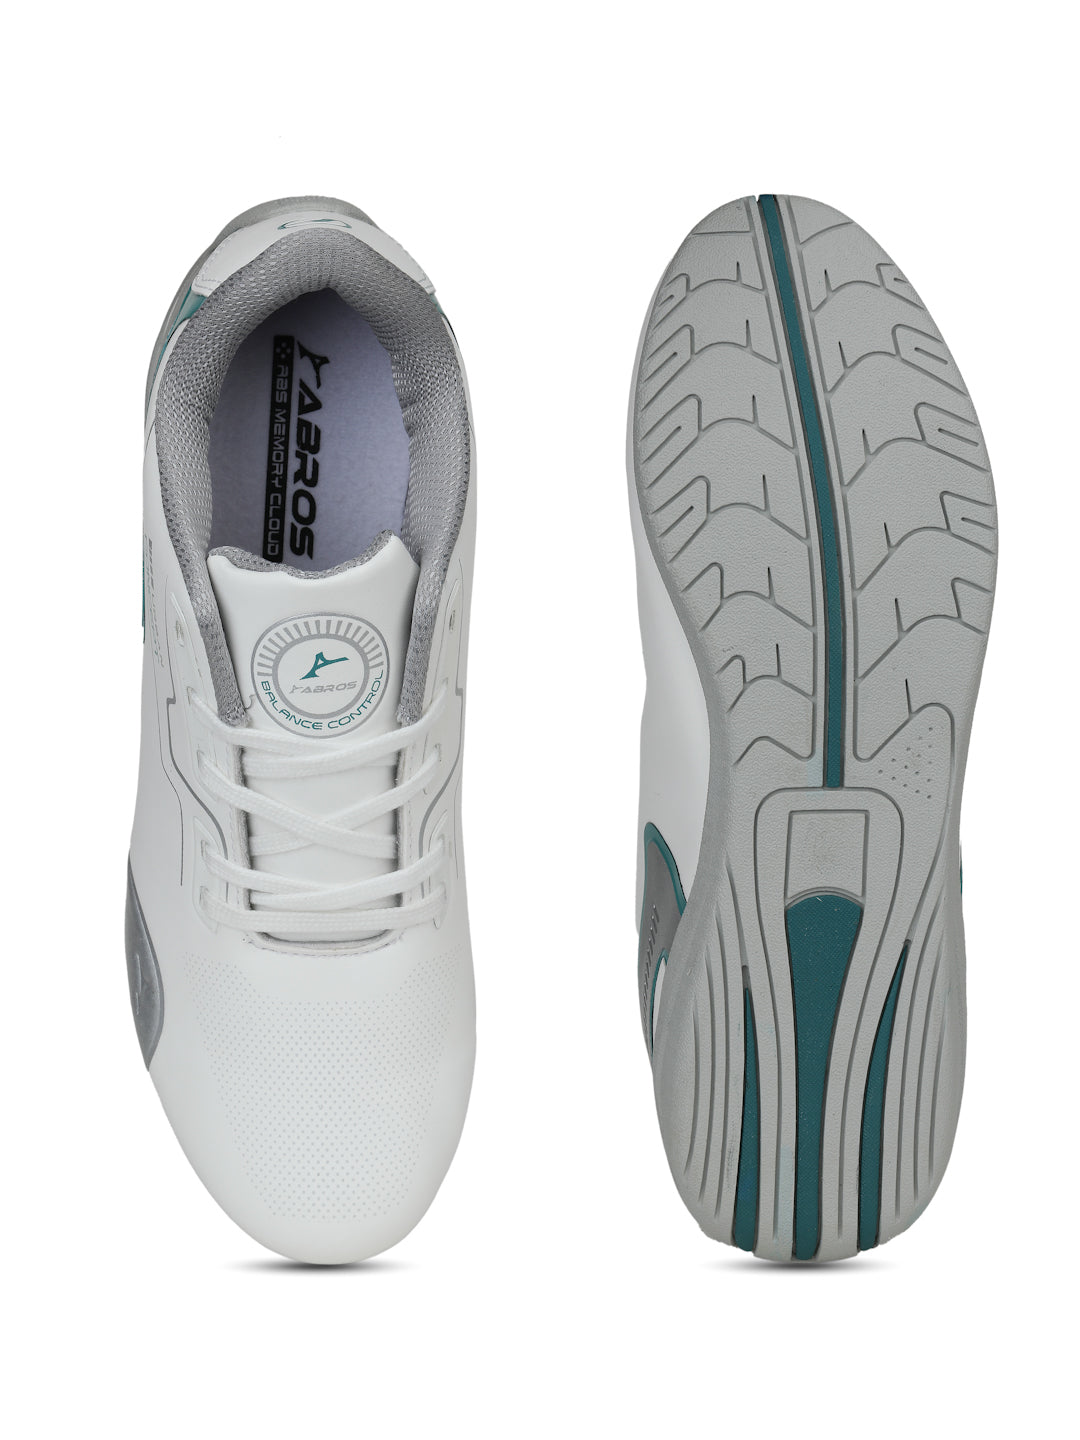 ABROS Casual Sneakers Algo8012 Bikor Lifestyle Shoes For Men